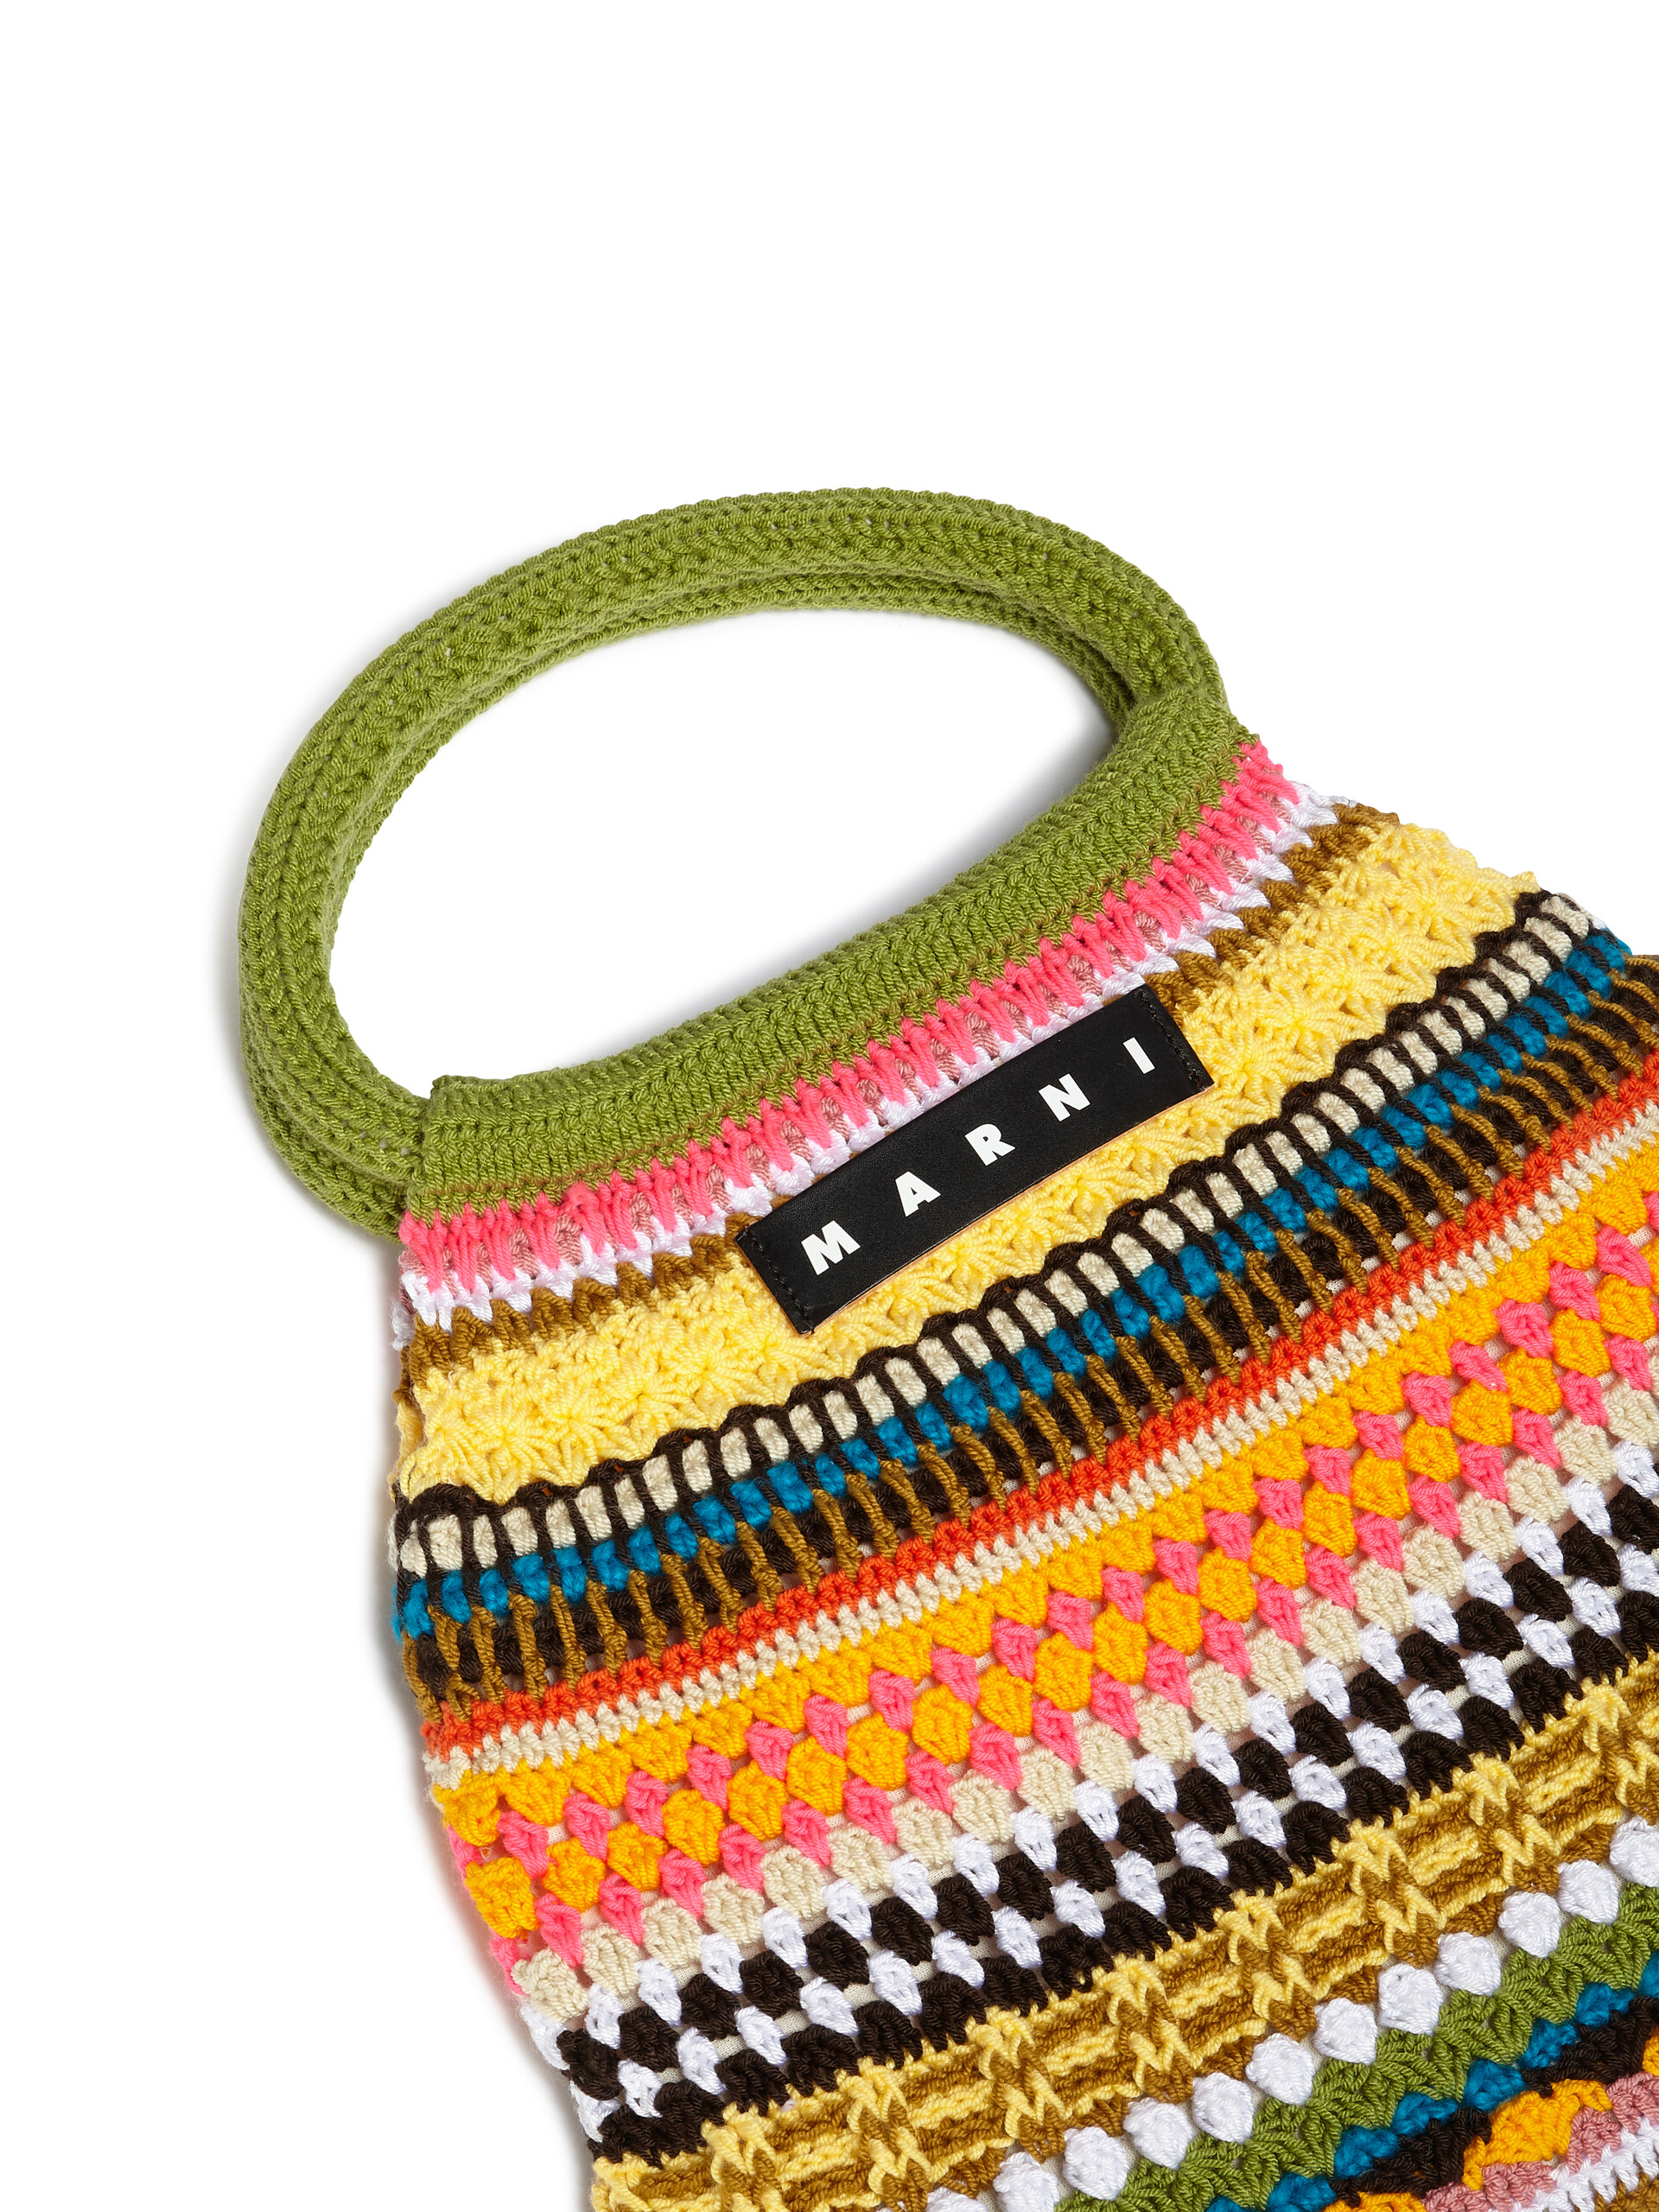 MARNI MARKET GRANNY bag in green crochet - Furniture - Image 4